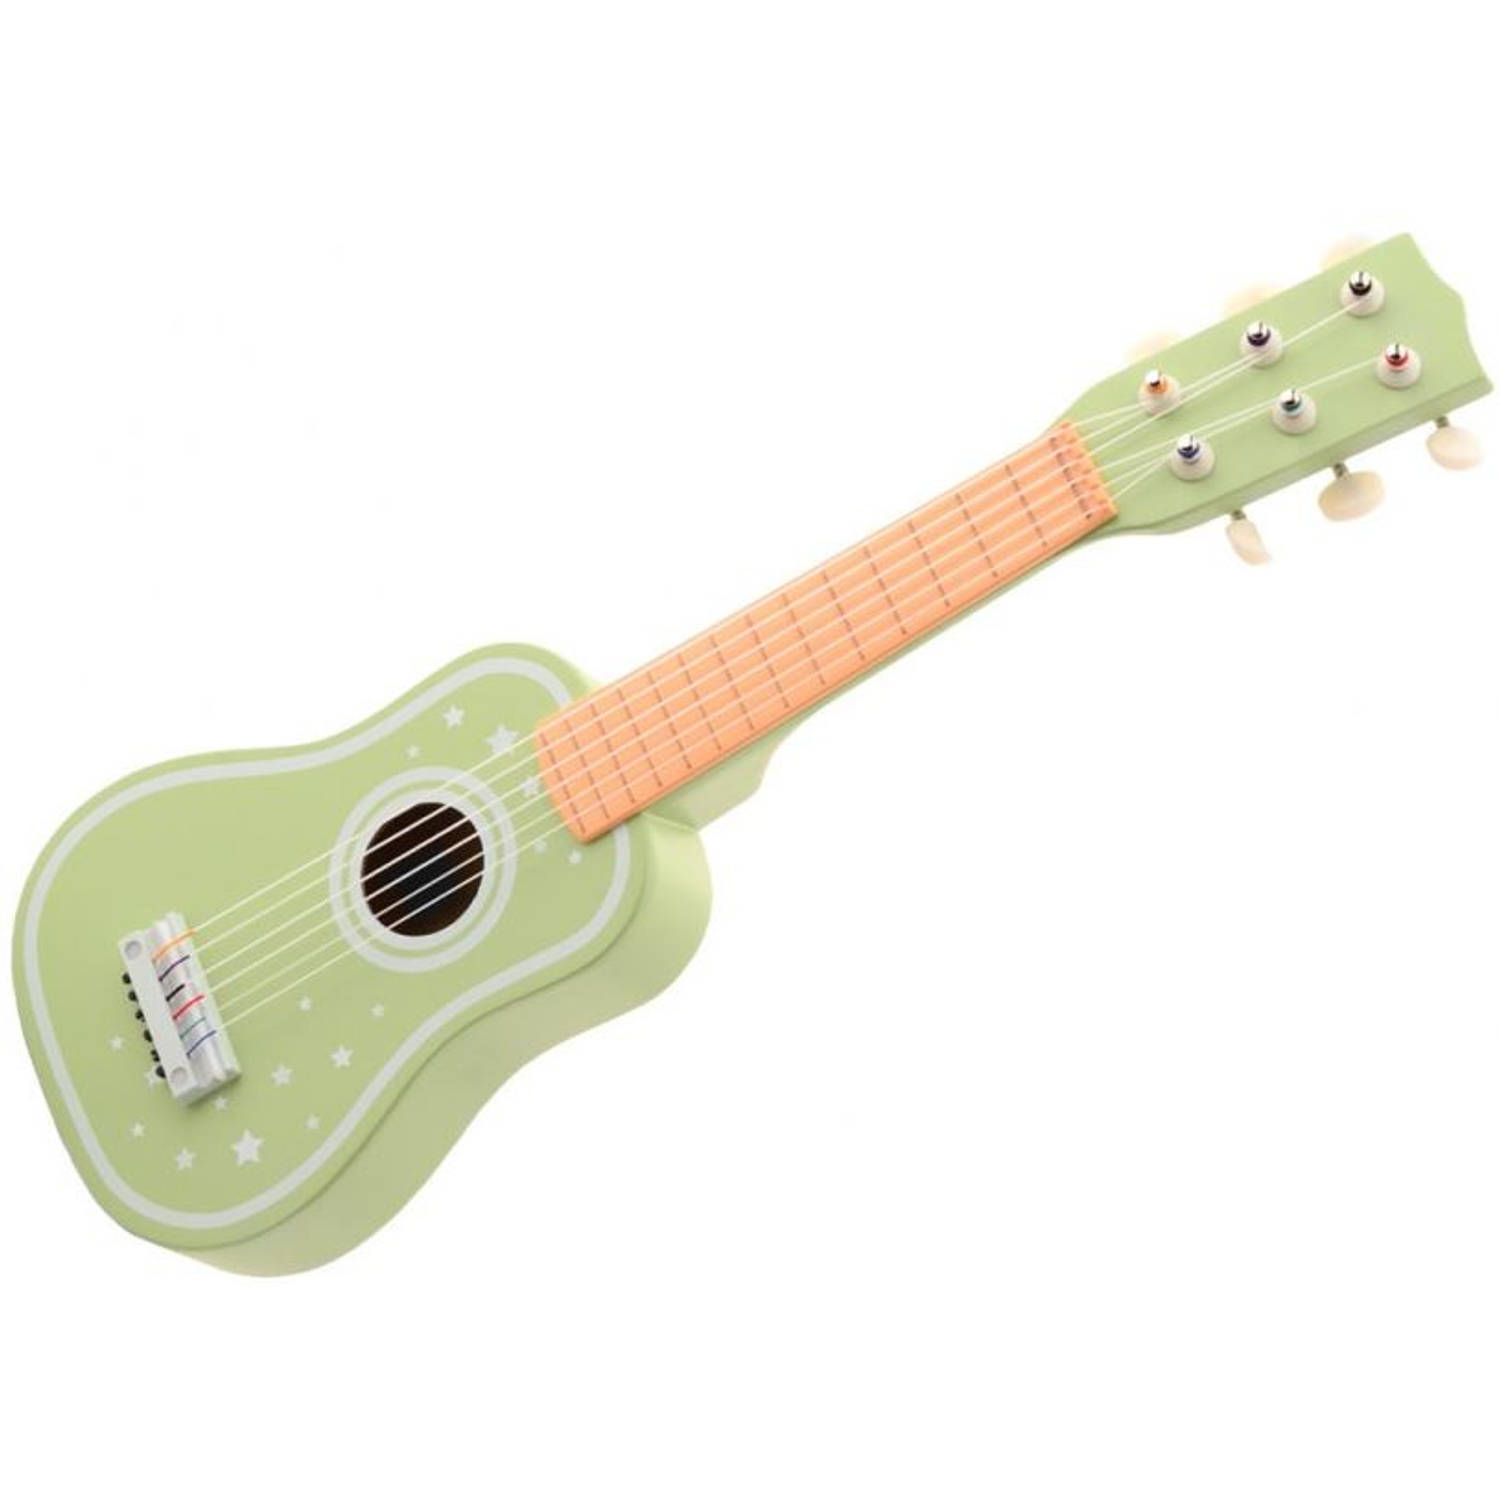 punt Ga wandelen picknick Jouéco gitaar junior hout groen/blank | Blokker